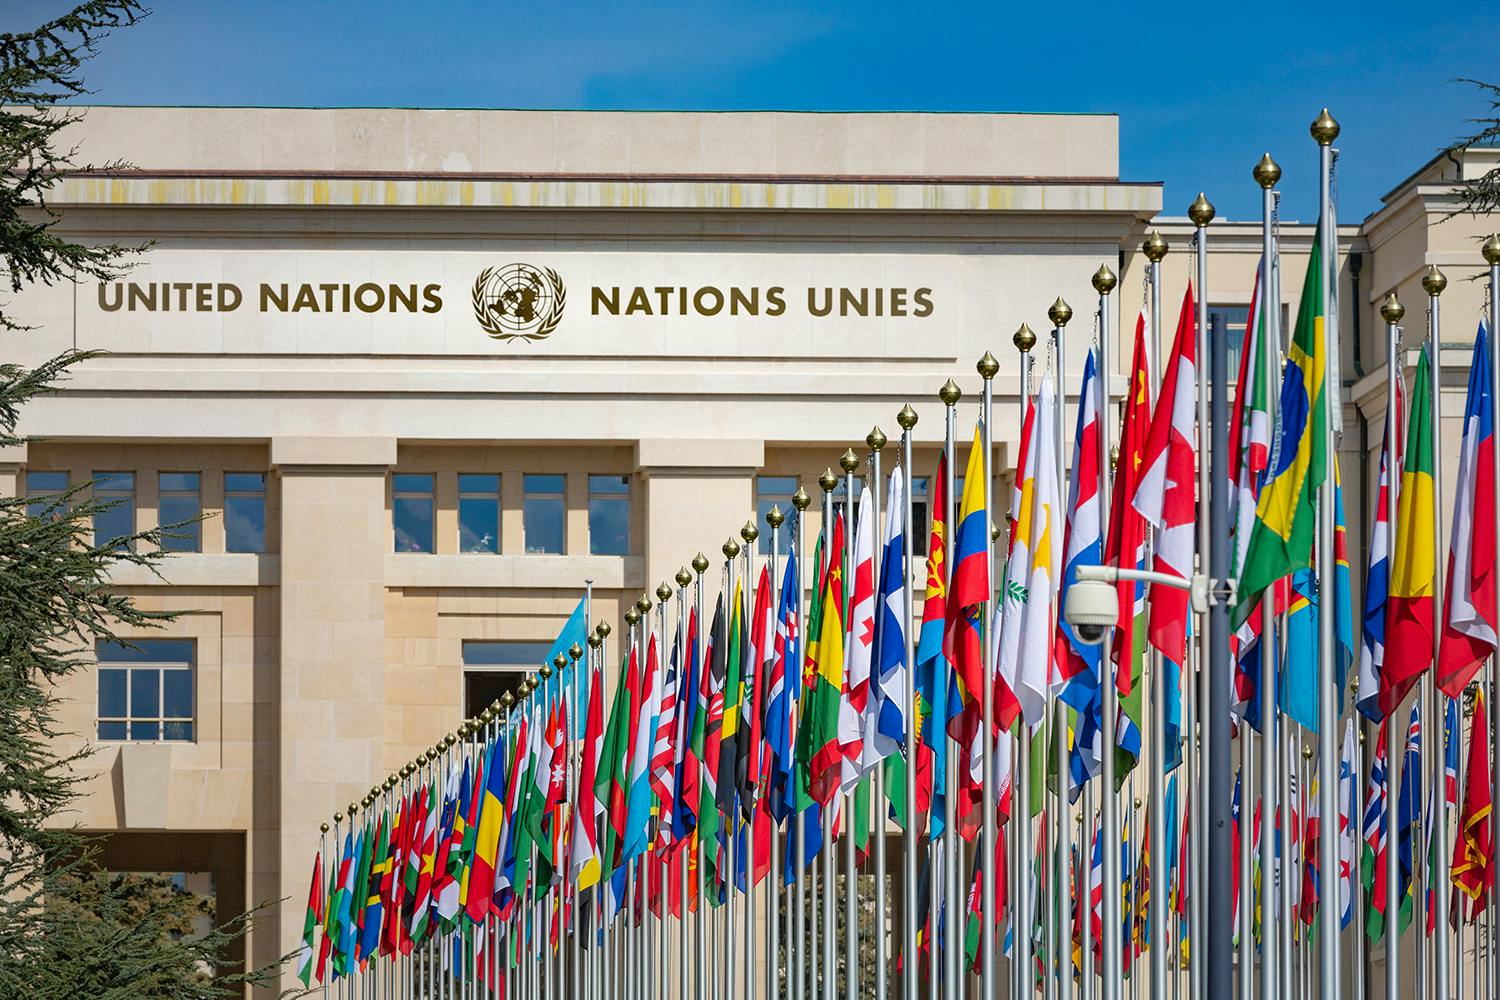 United Nations building in Geneva, Switzerland. Photo by nexus 7/Shutterstock.